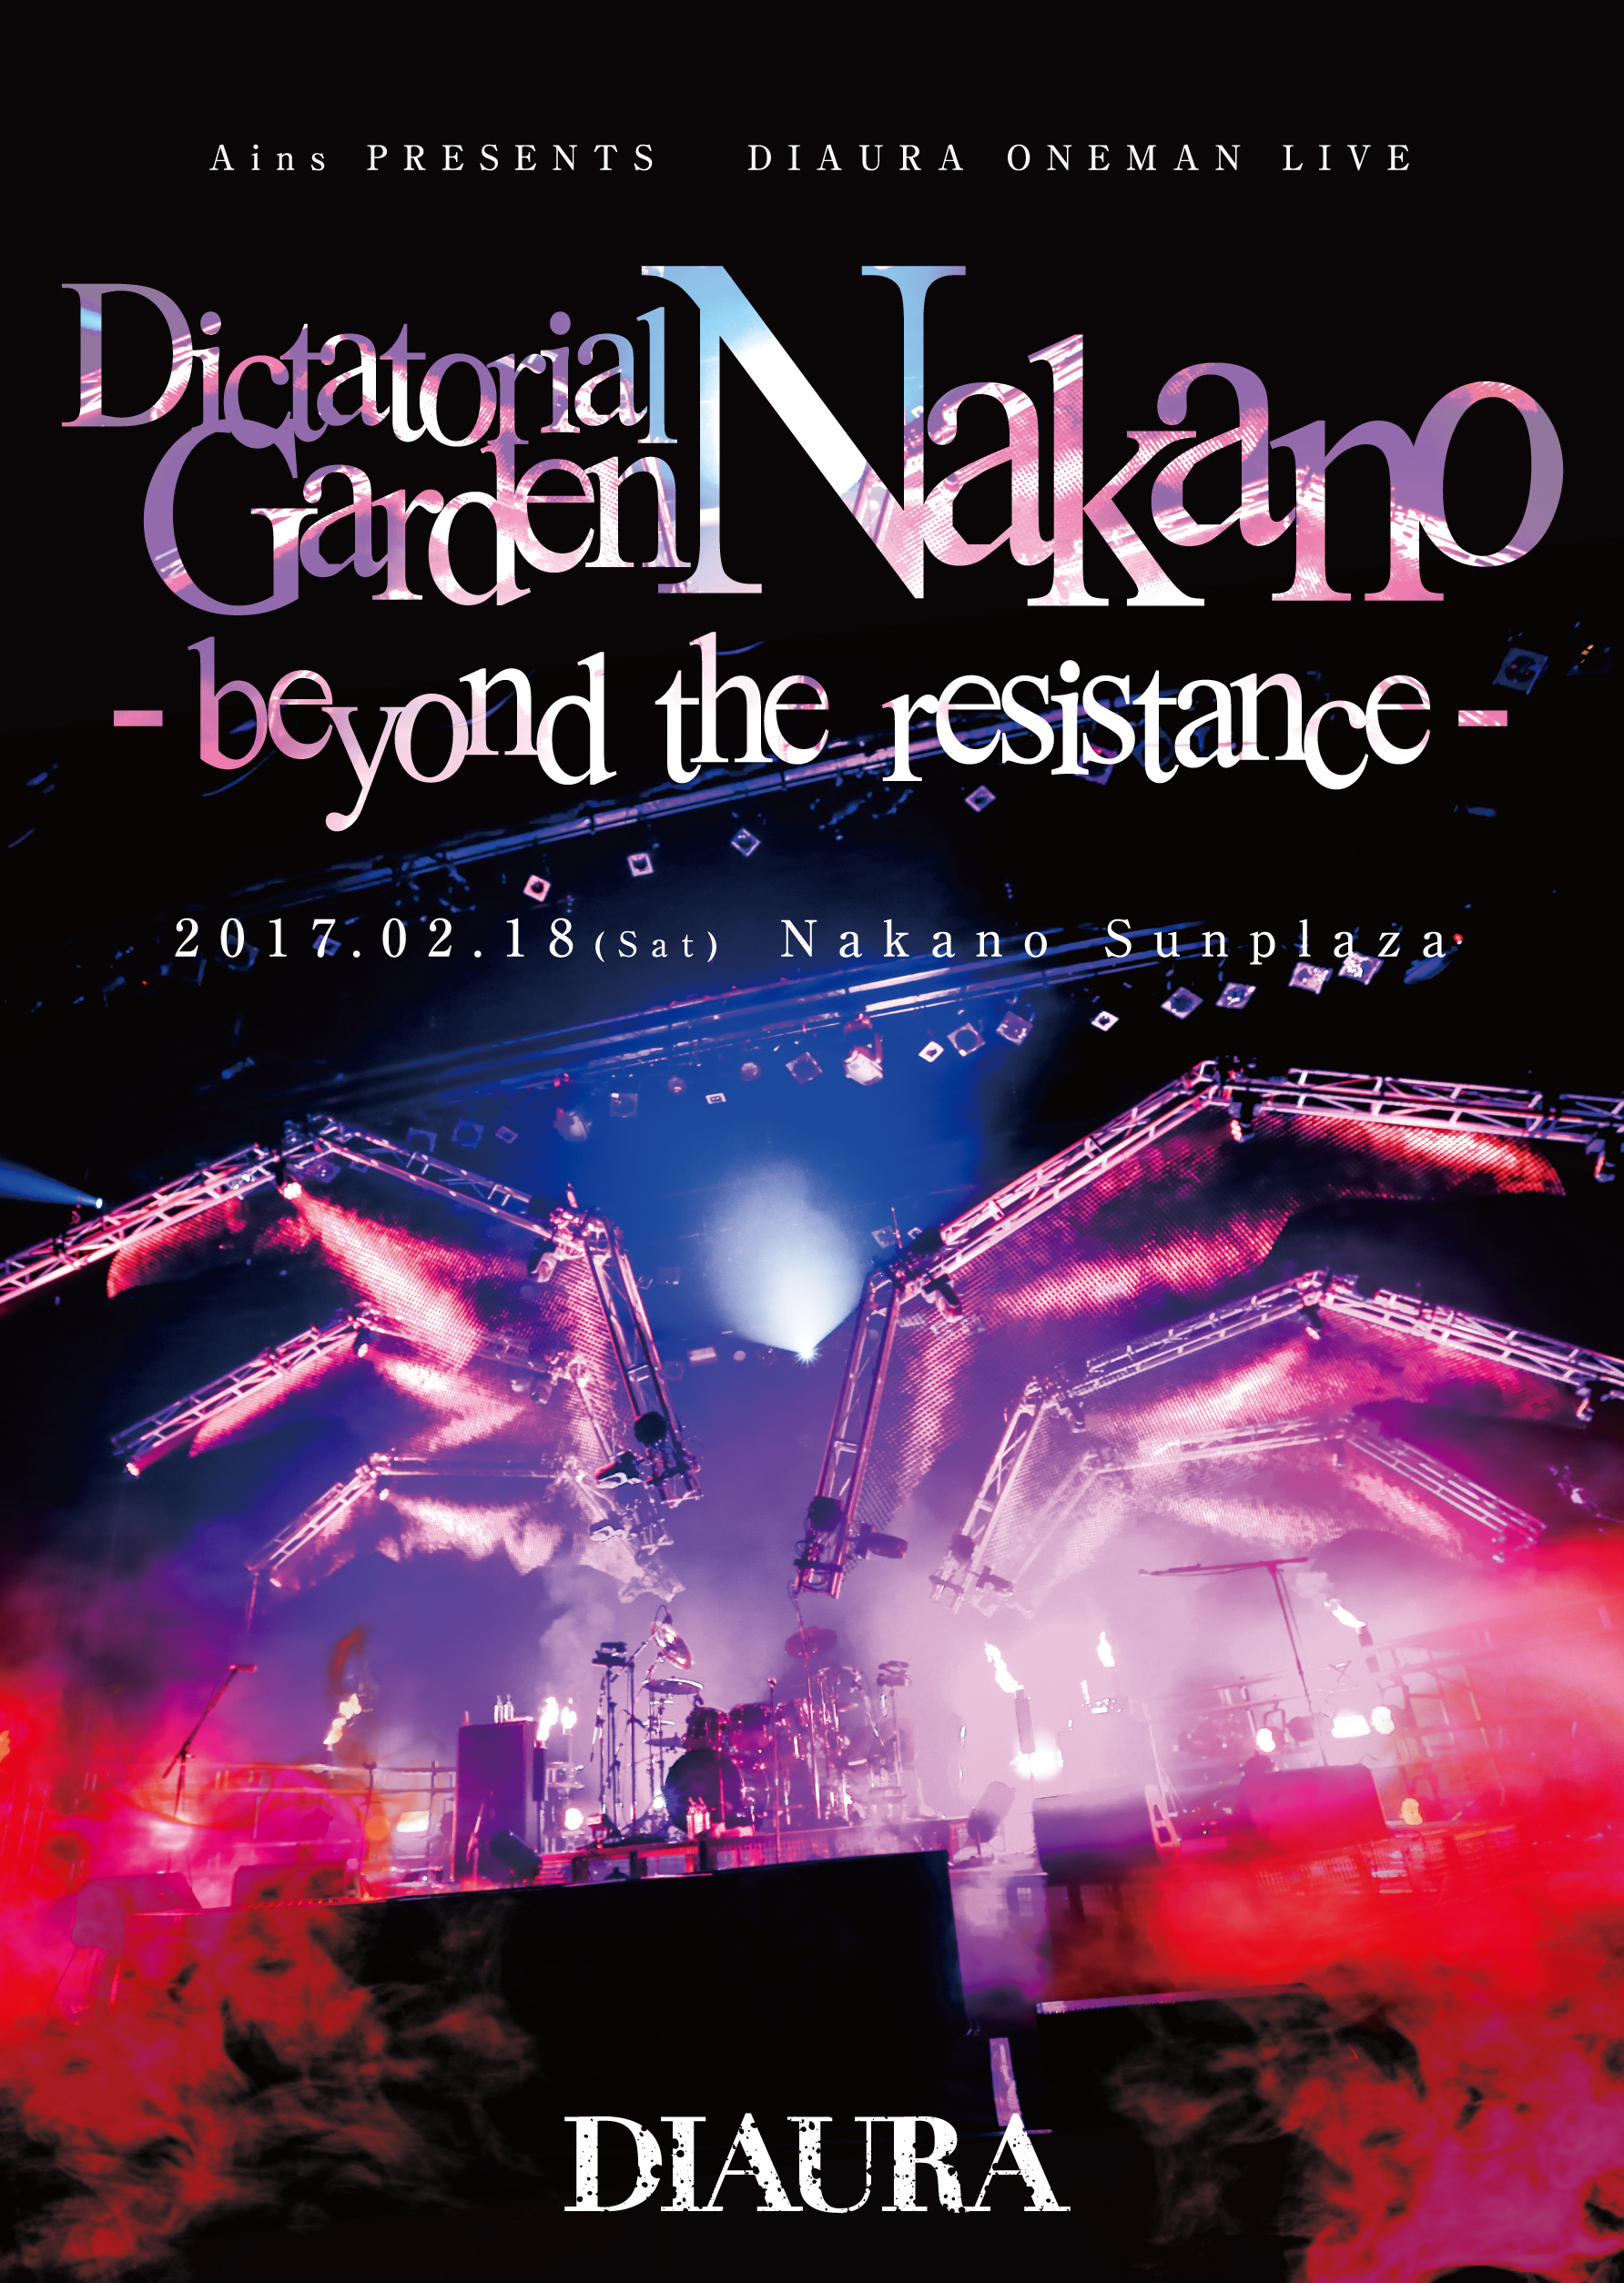 DIAURA ( ディオーラ )  の DVD Ains PRESENTS DIAURA ONEMAN LIVE「Dictatorial Garden Nakano-beyond the resistance-」2017.02.18(Sat)Nakano Sunplaza